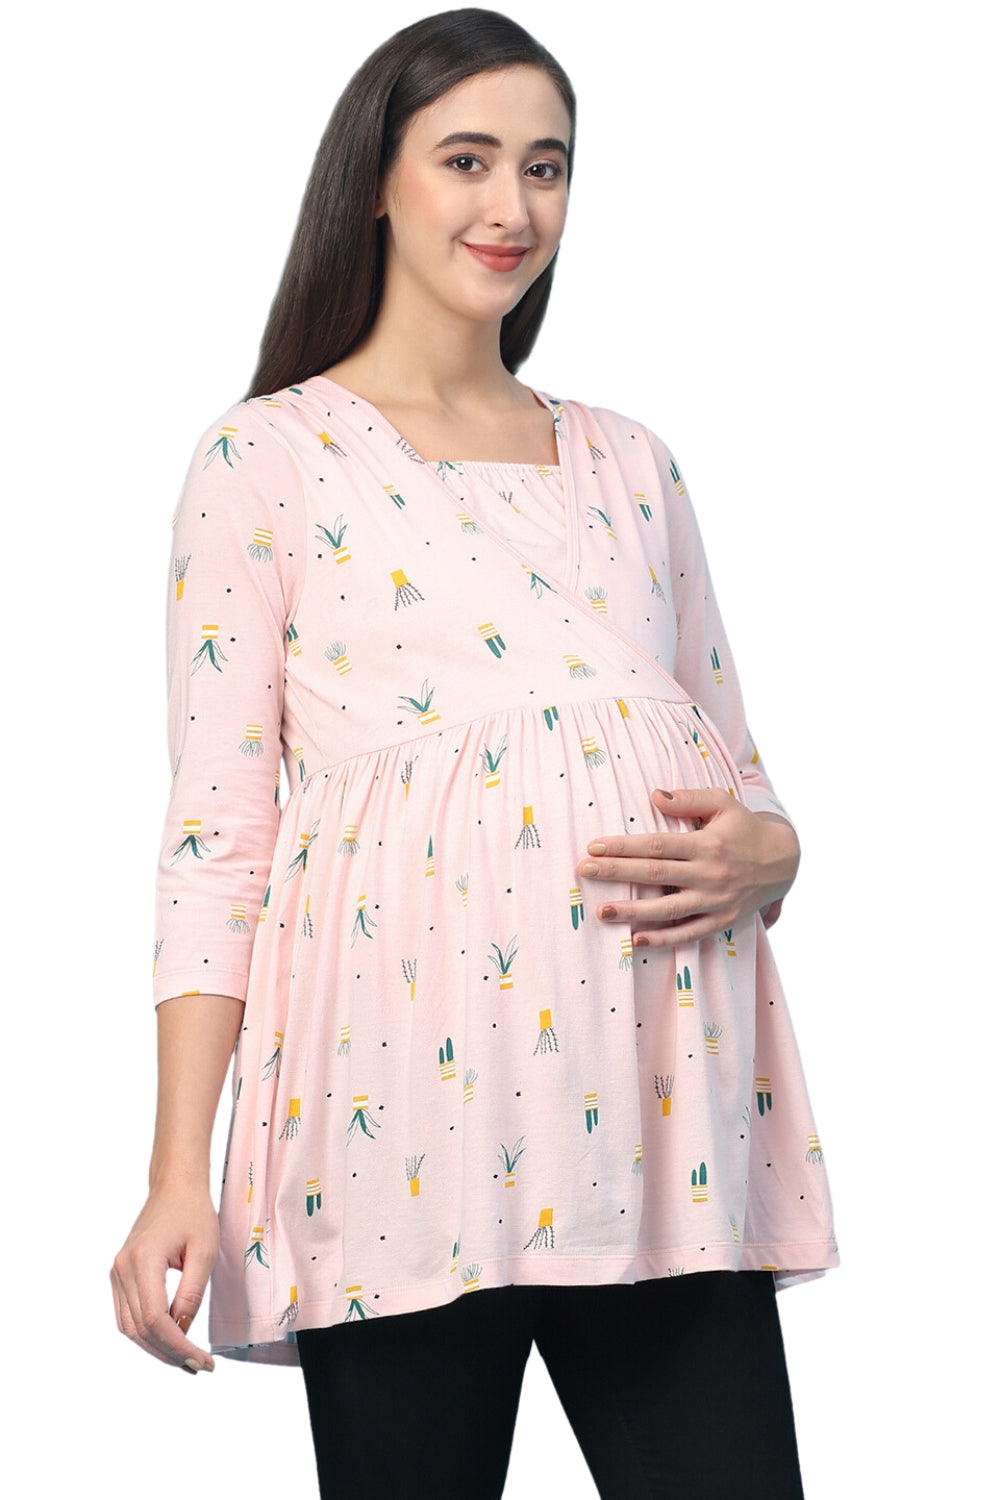 Organic Healthy Full Sleeves Maternity Top_ISML008-Pink Dogwood